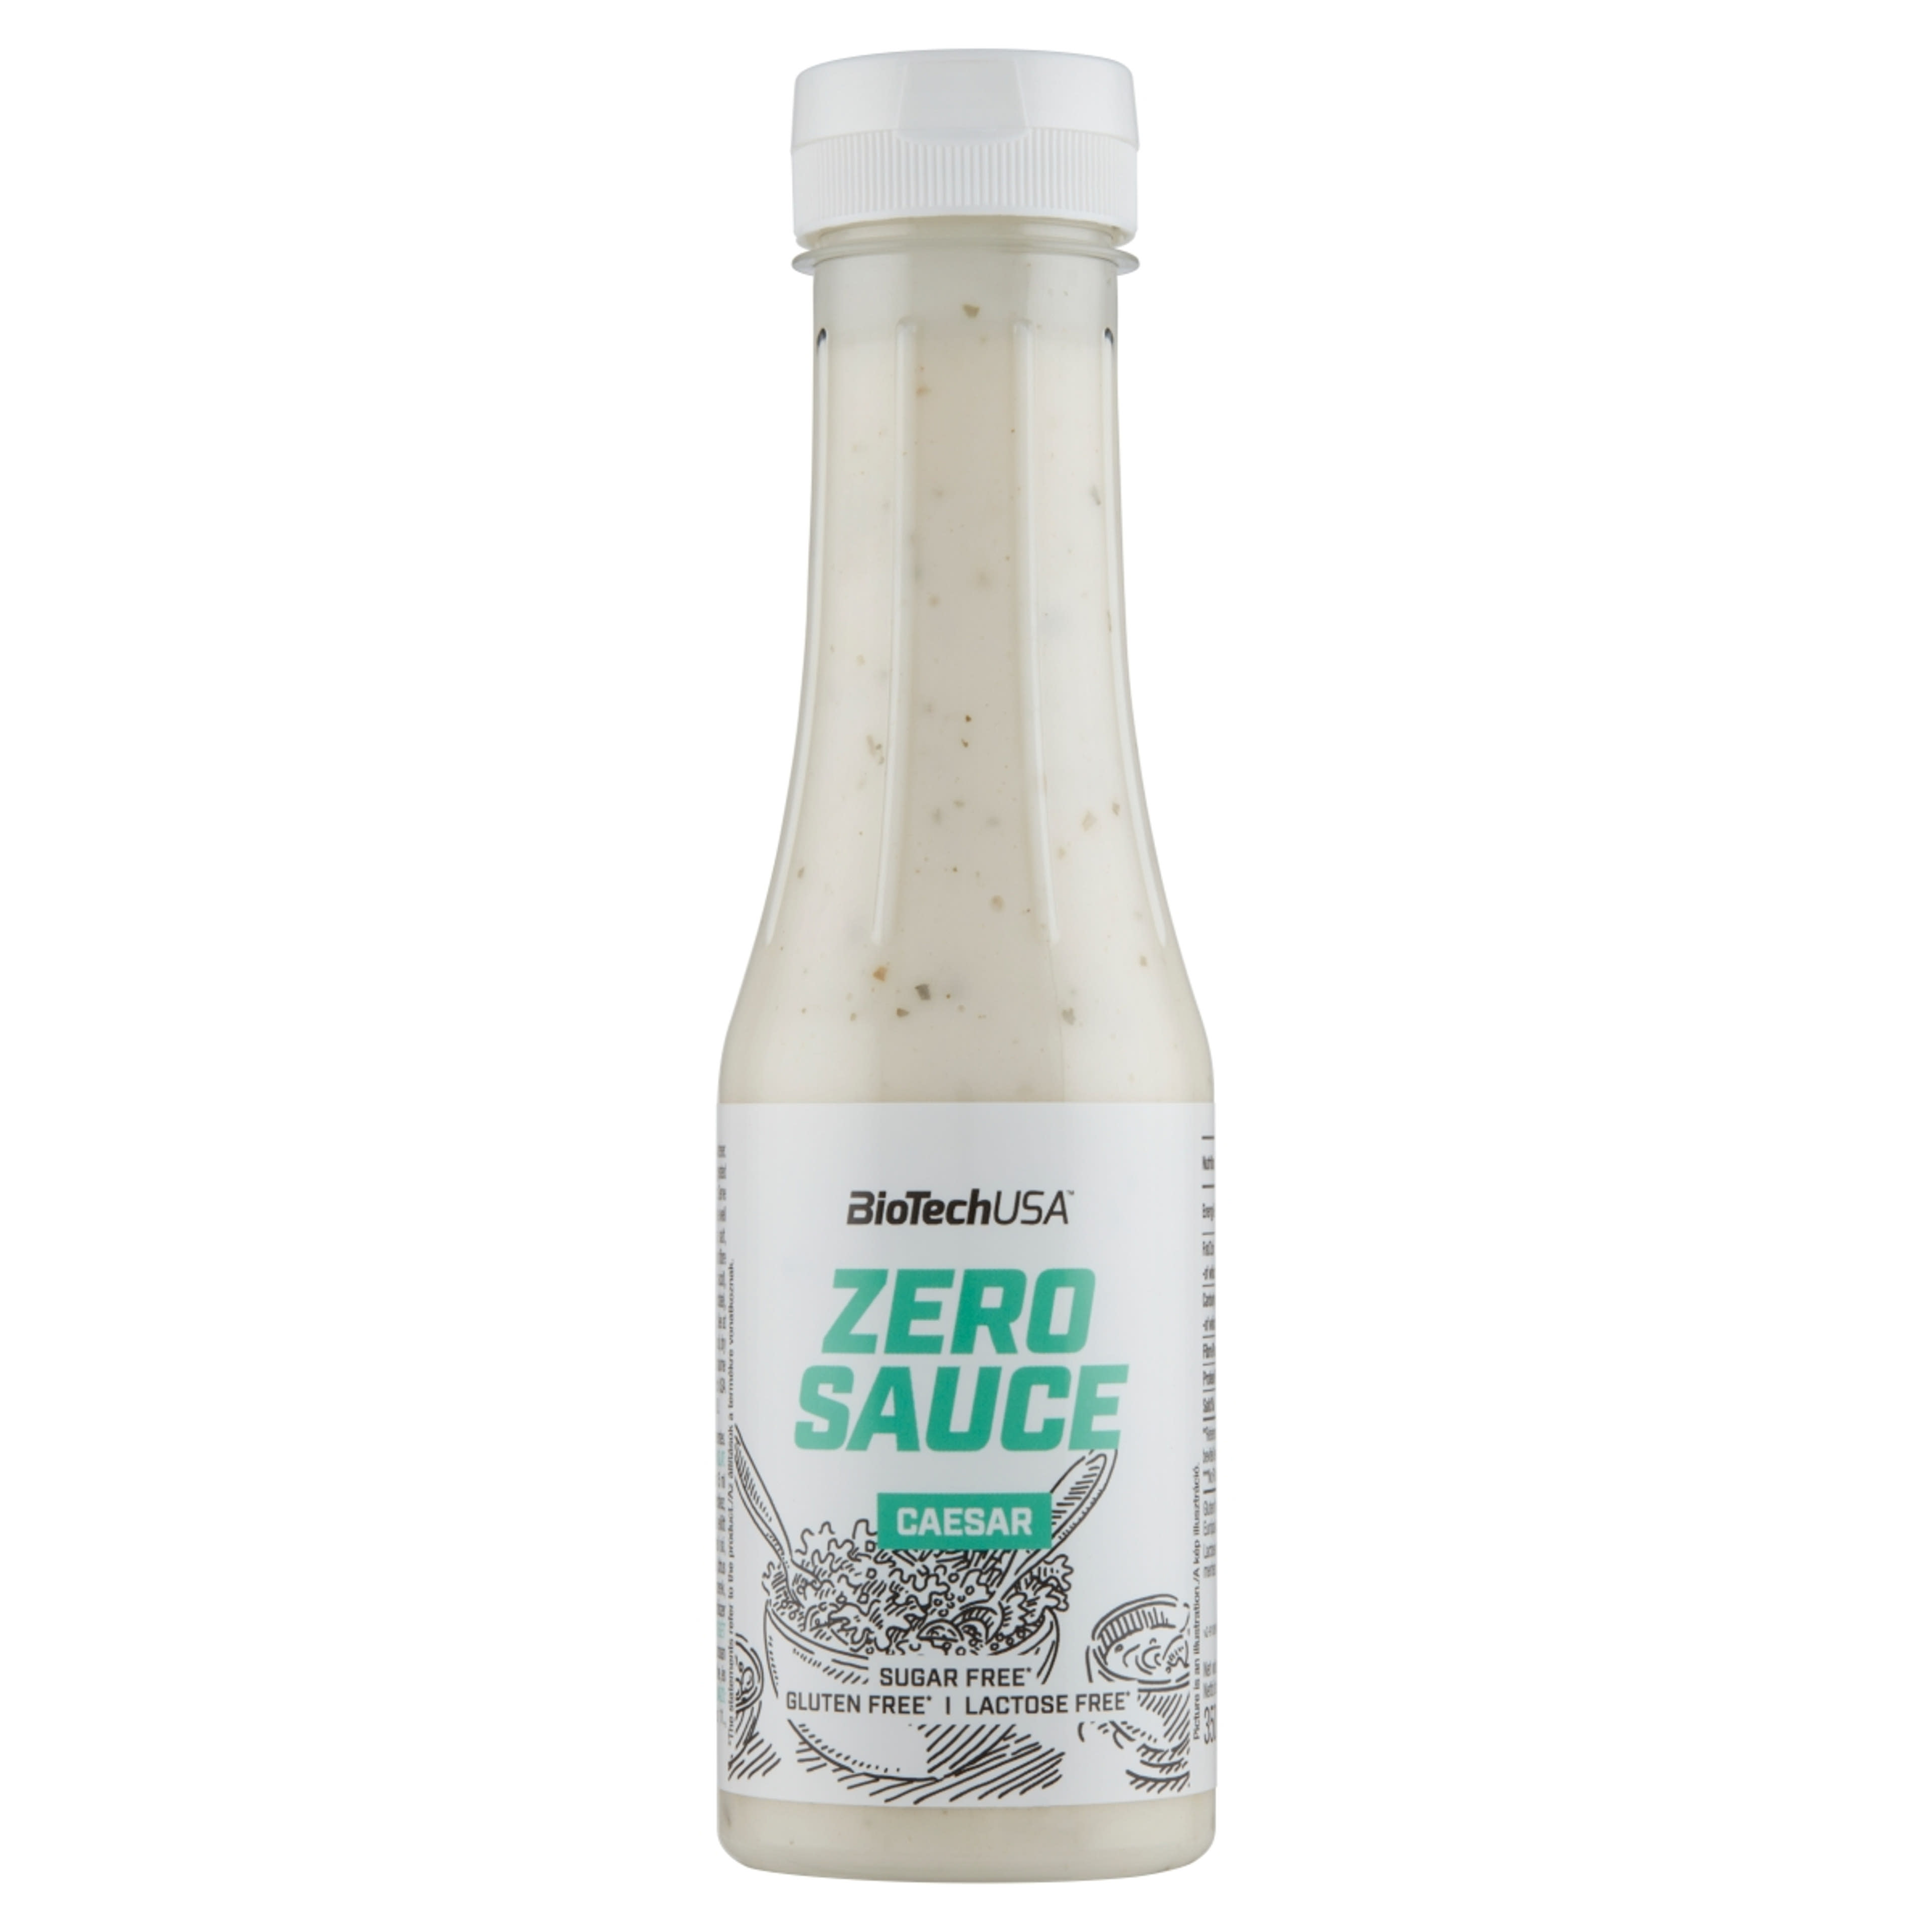 BioTechUSA Zero Sauce Caesar öntet - 350 ml-1